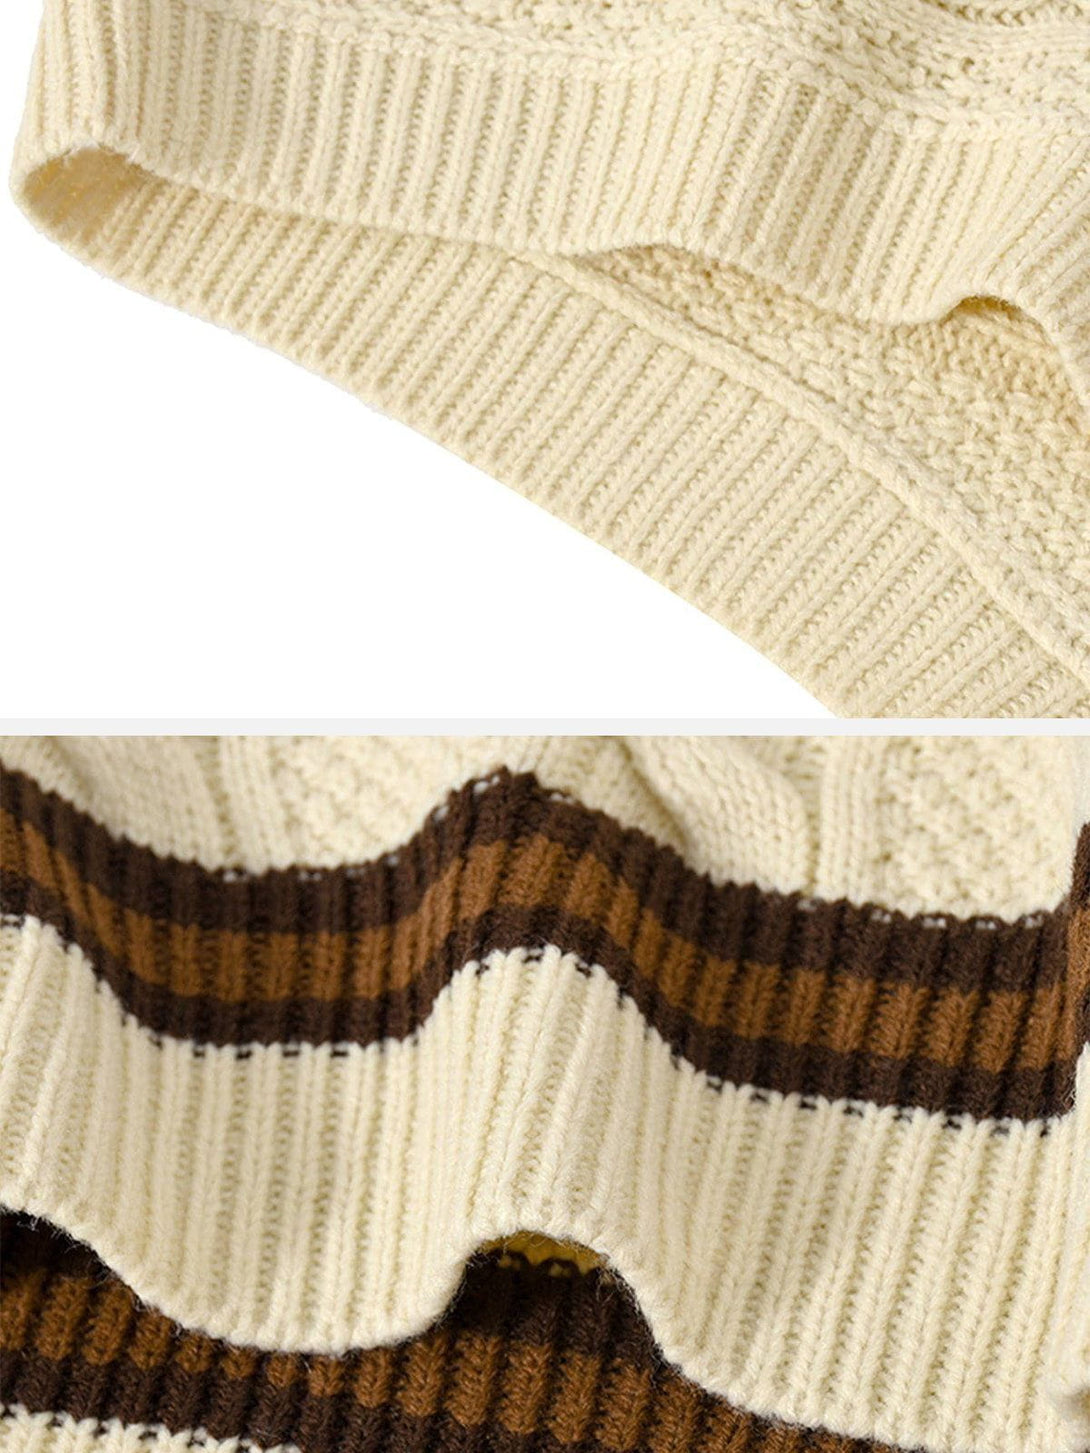 Majesda® - Vintage Preppy Style Knit Sweater Vest outfit ideas streetwear fashion